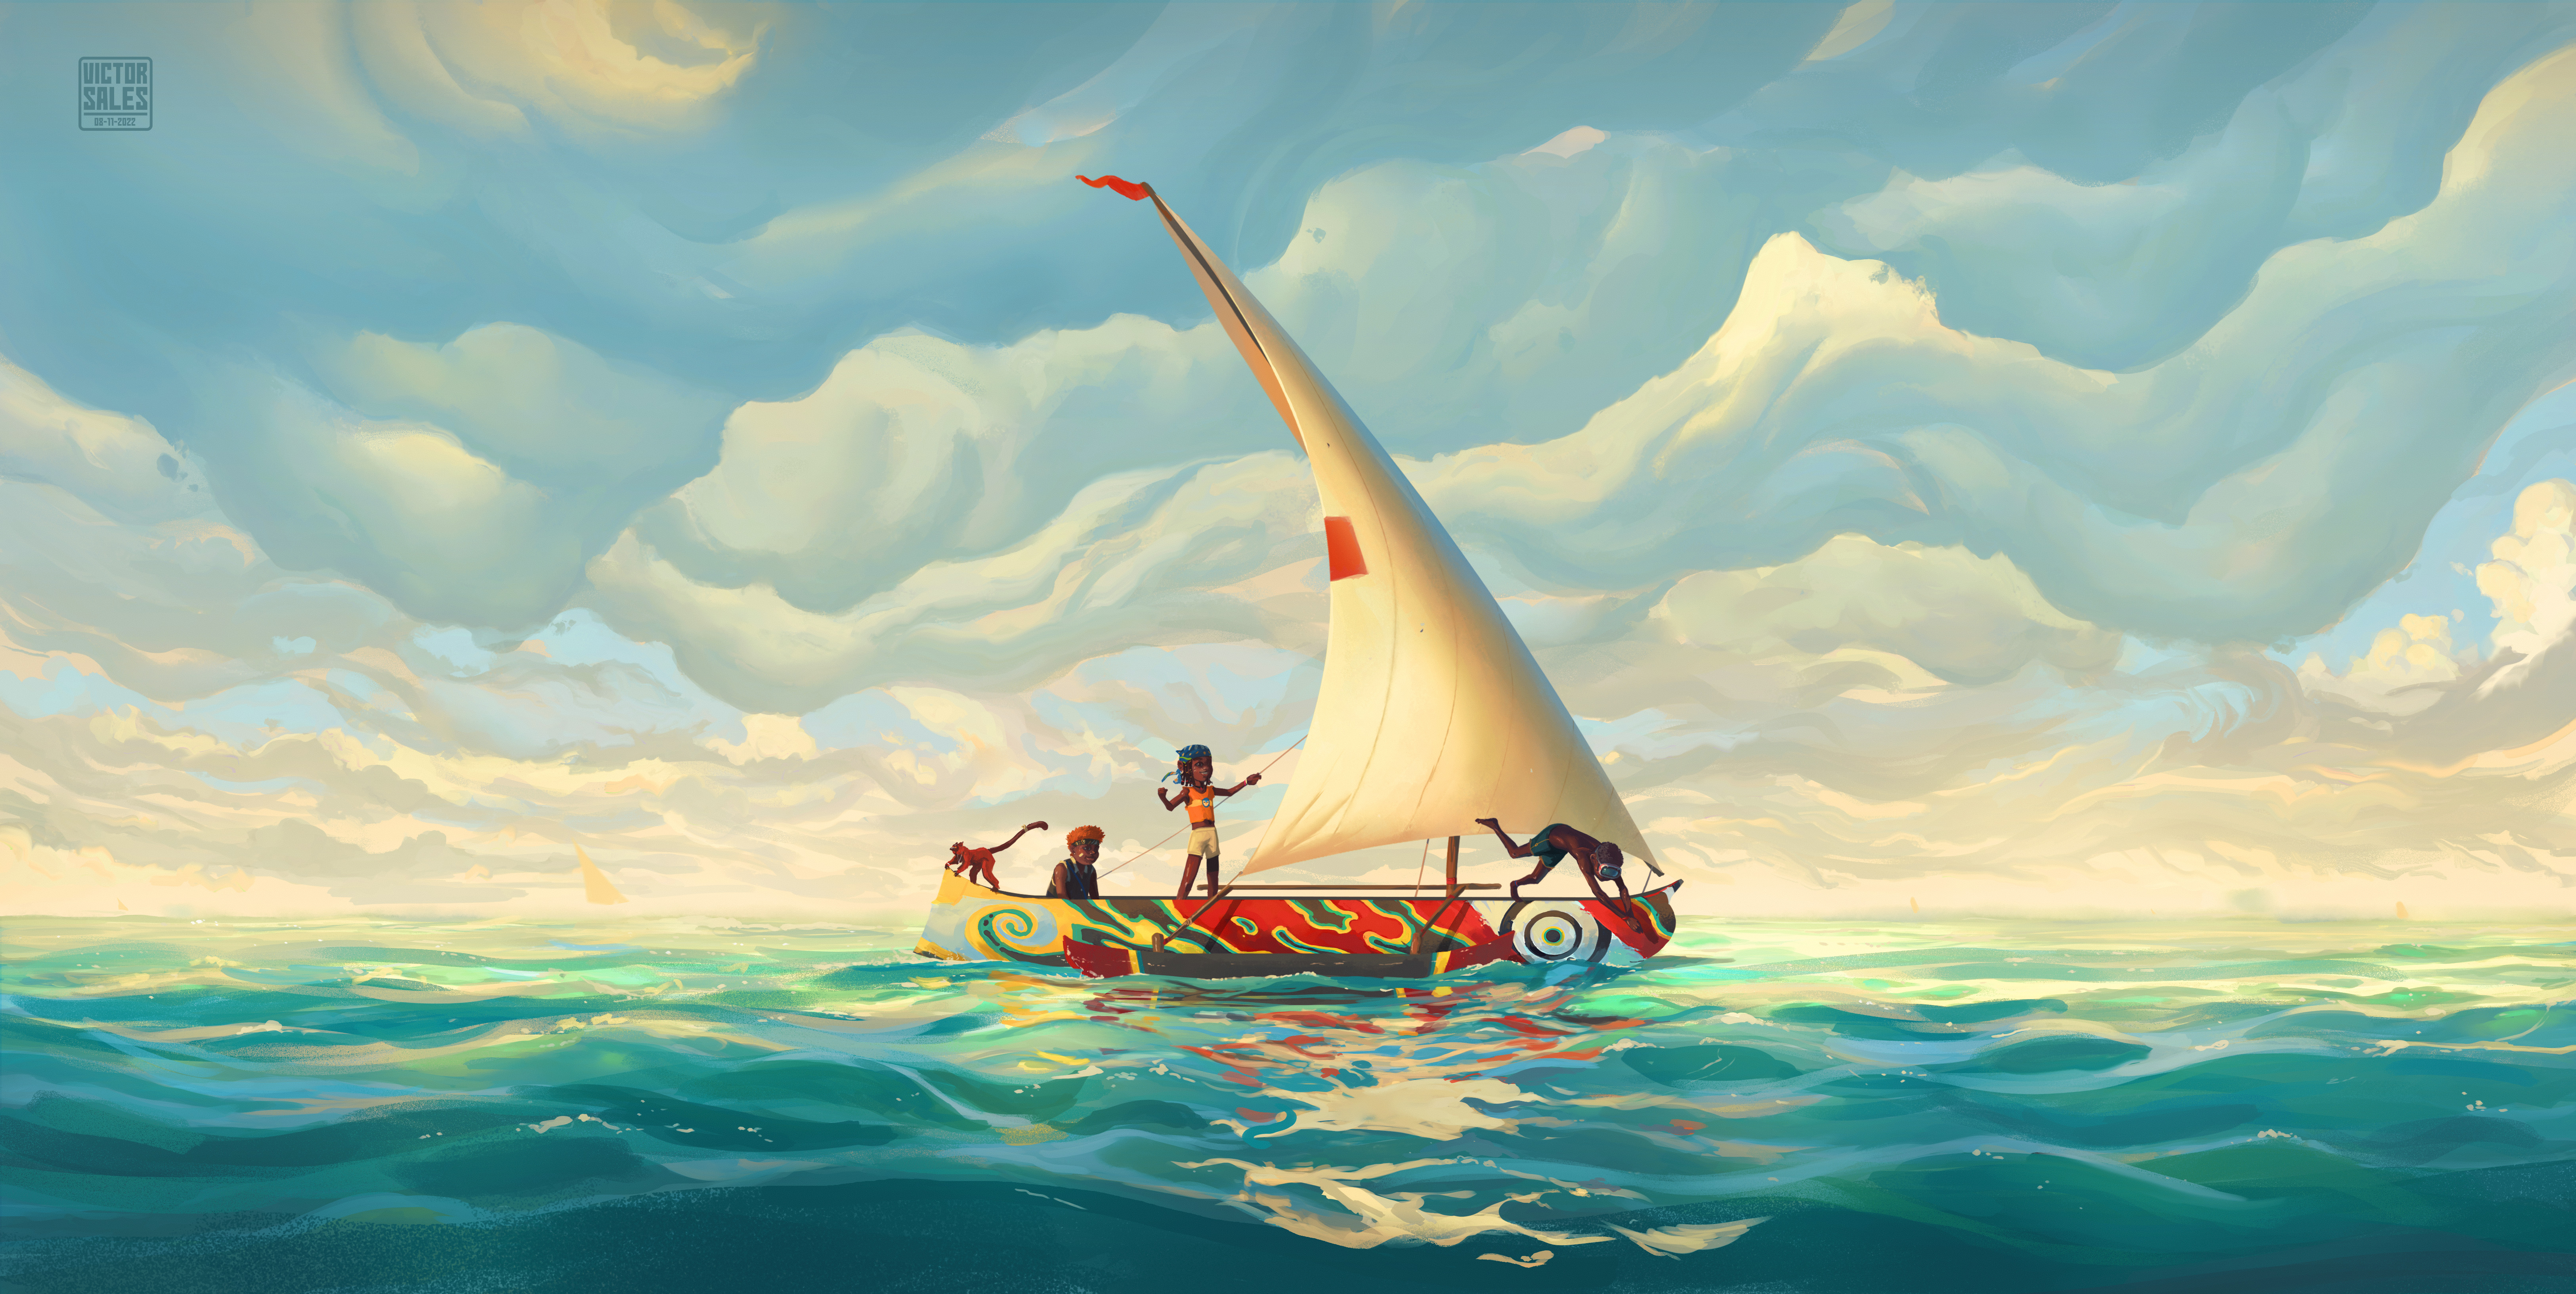 General 6500x3264 digital art artwork illustration landscape sea water boat clouds children sailing ship nature sky